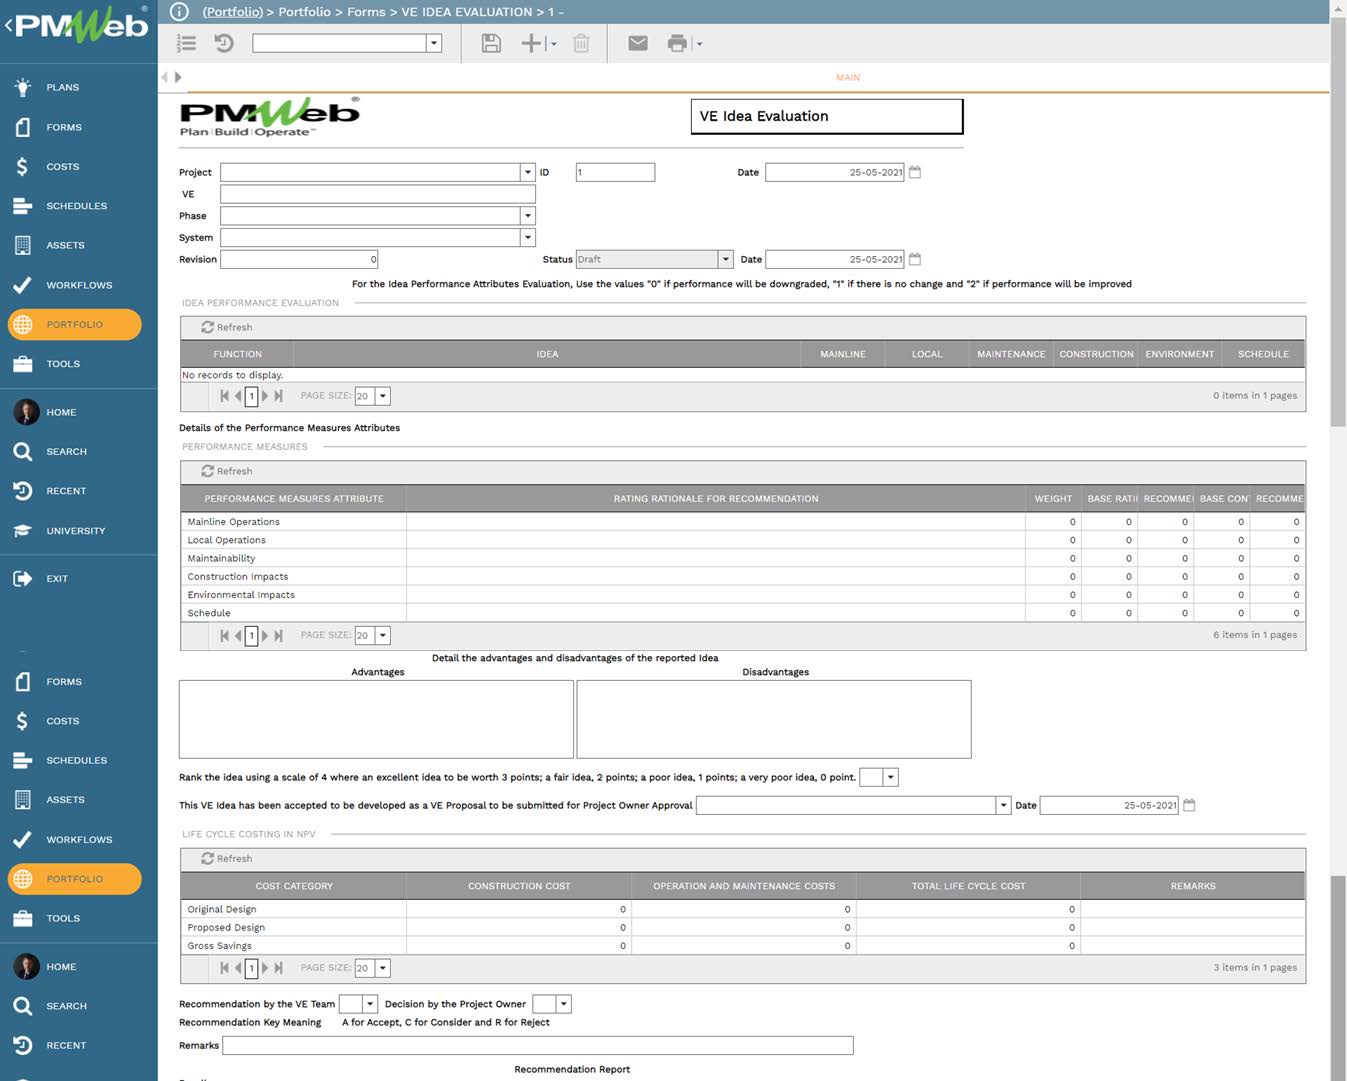 PMWeb 7 Portfolio Forms VE Idea Evaluation  Main 